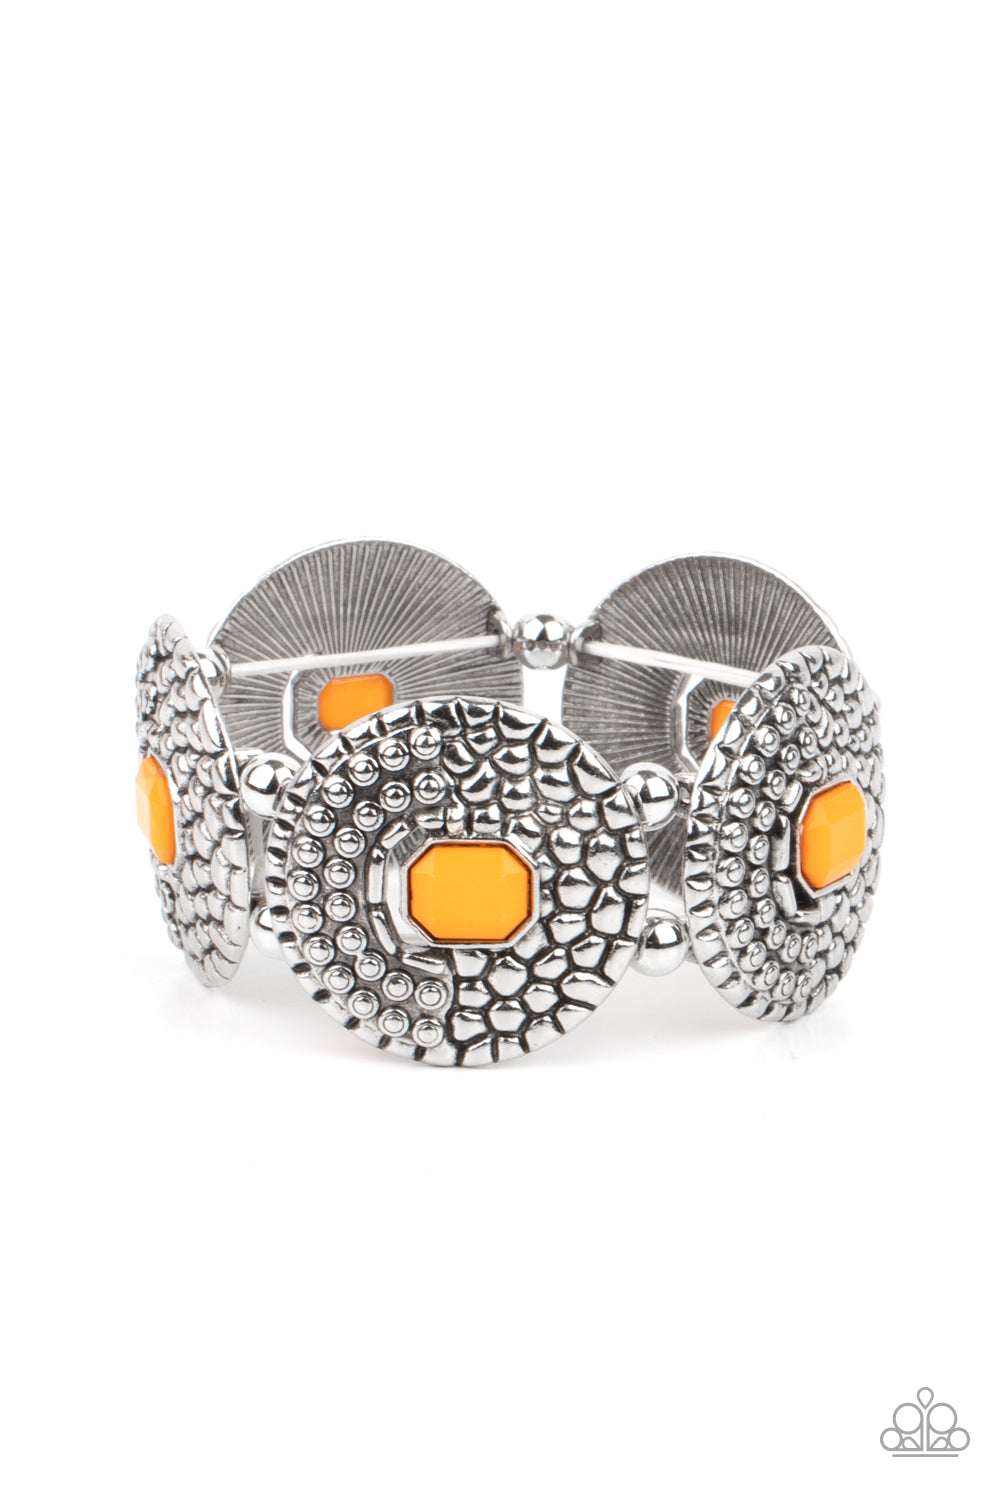 Prismatic Prowl - Orange Bracelet - Paparazzi Accessories - Paparazzi Accessories 